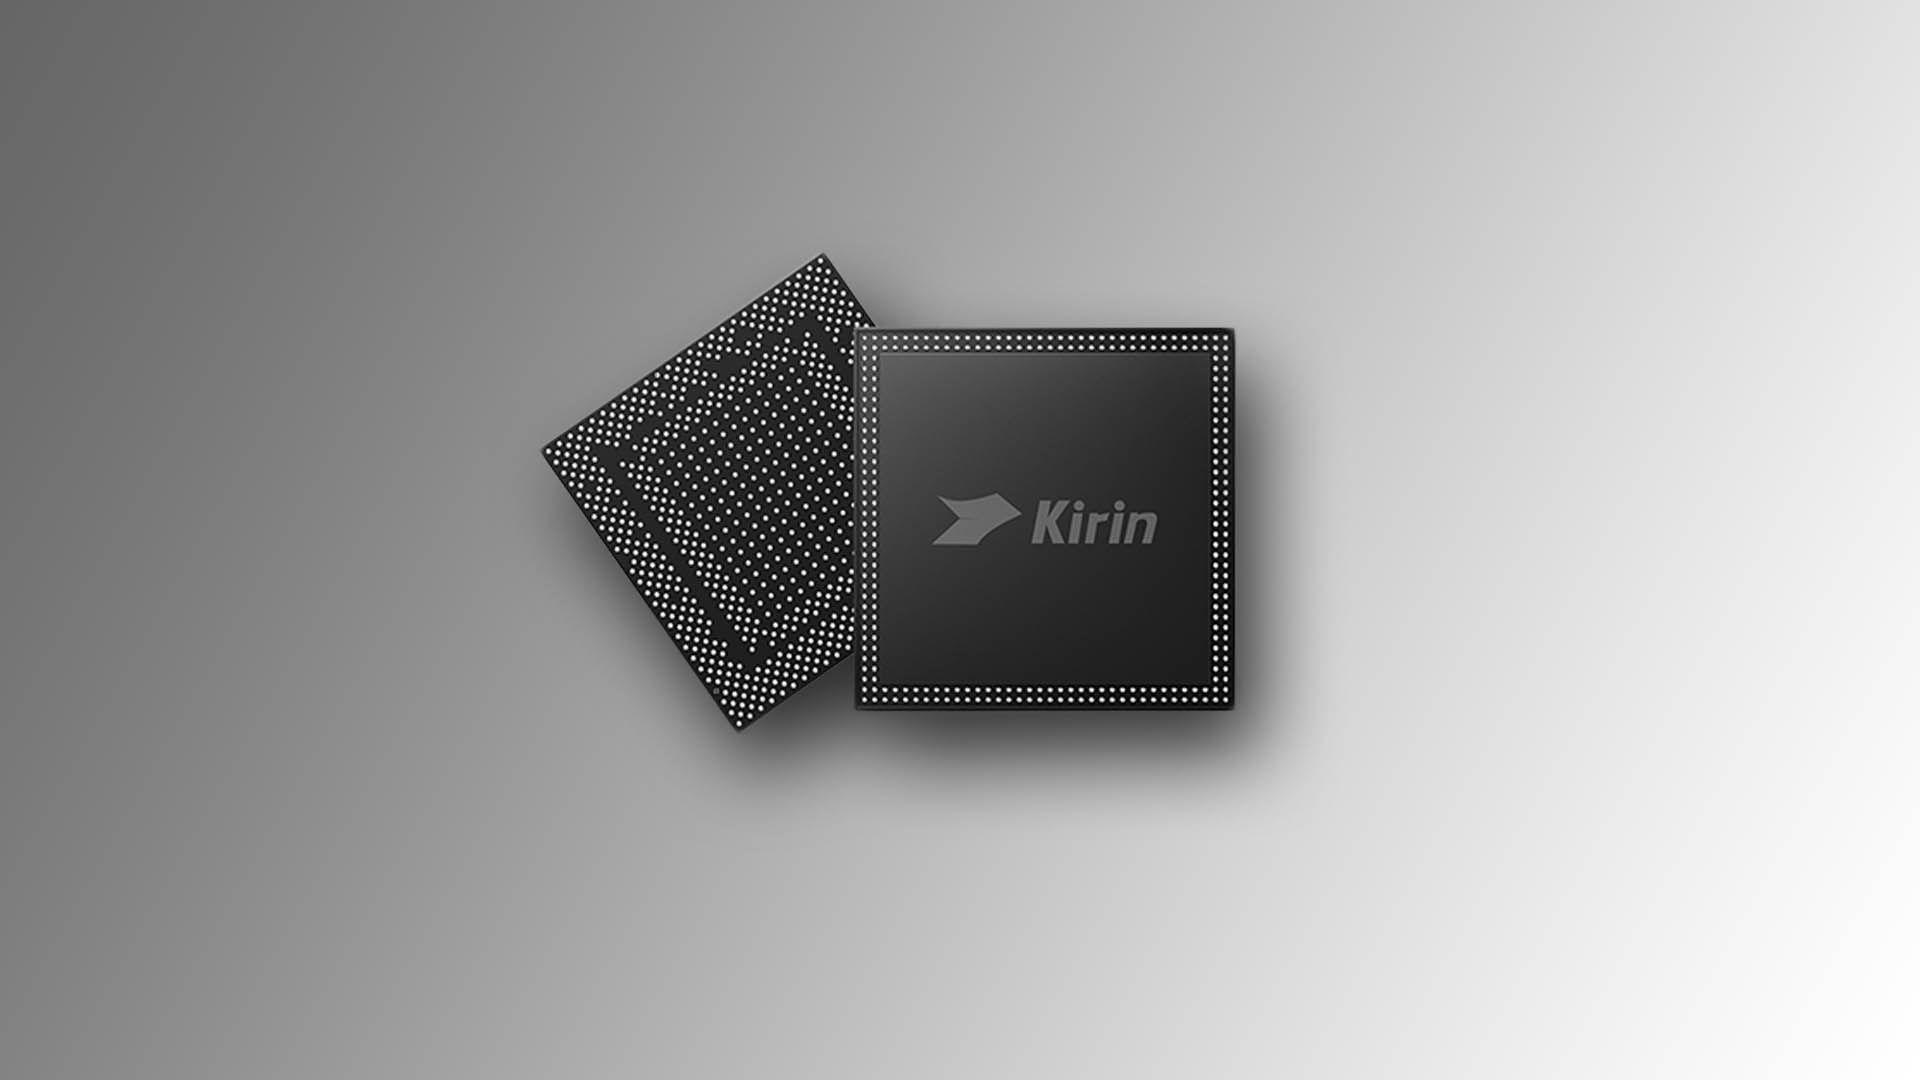 Similar TSMC Logo - Kirin 980 Confirmed to Be Made on TSMC's 7nm FinFET Process With